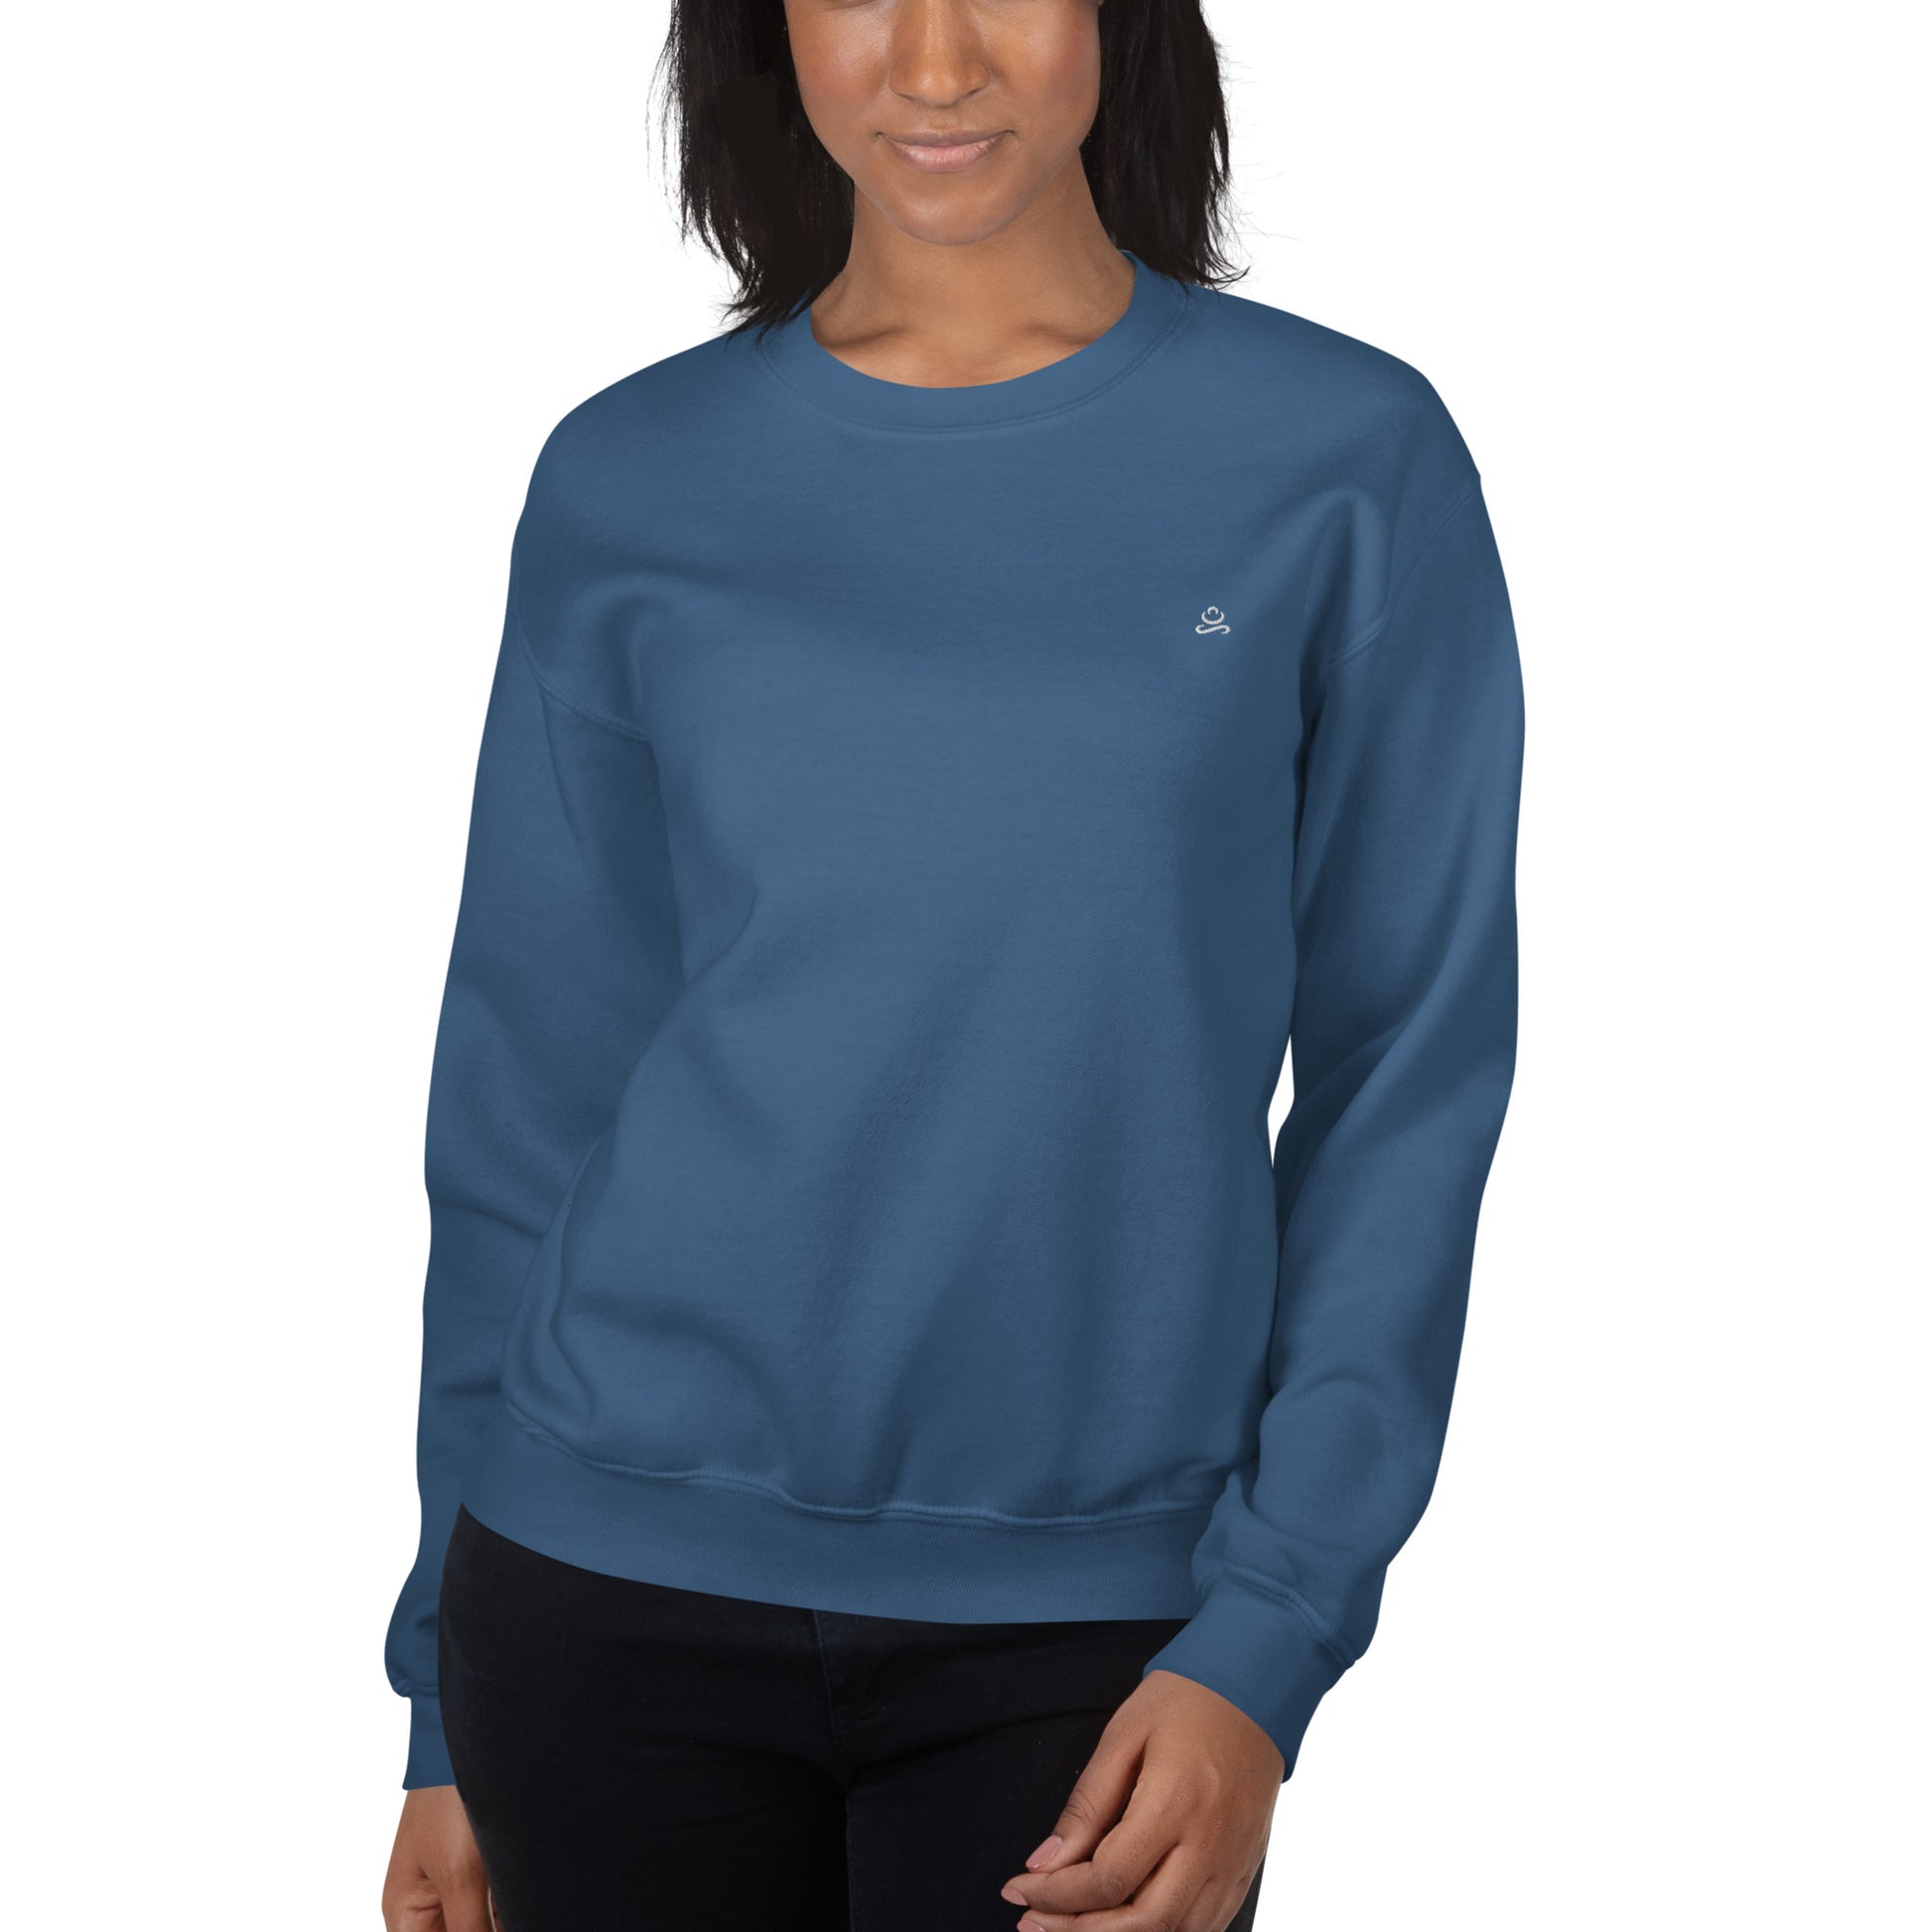 Indigo Blue Women's Cotton Sweatshirt by Women's Cotton Sweatshirt sold by Jain Yoga